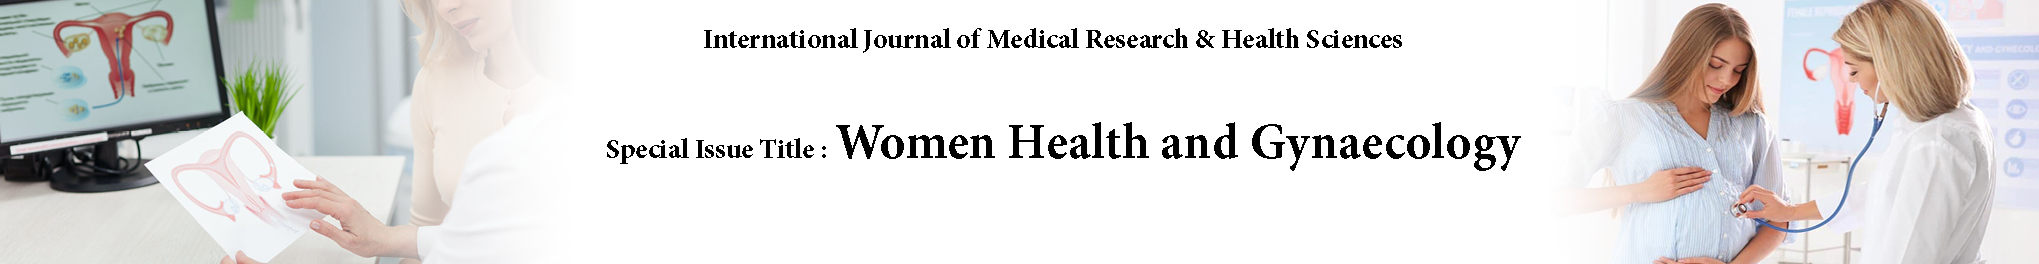 577-women-health-and-gynaecology.jpg